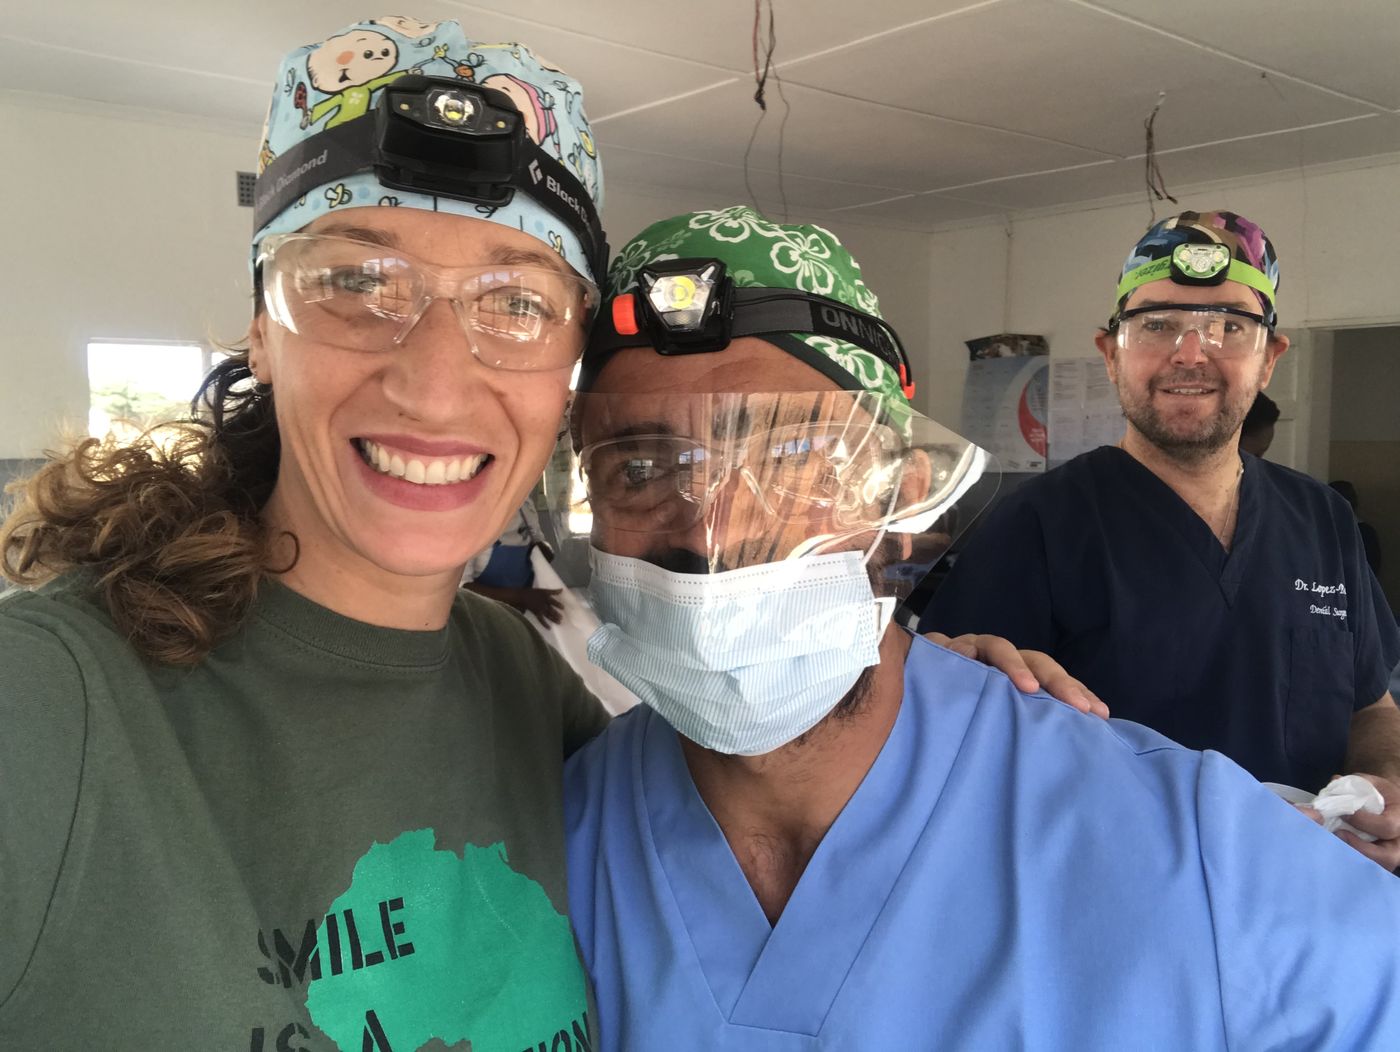 Dental Morante vuelve a Zimbabwe con Smile is a Foundation